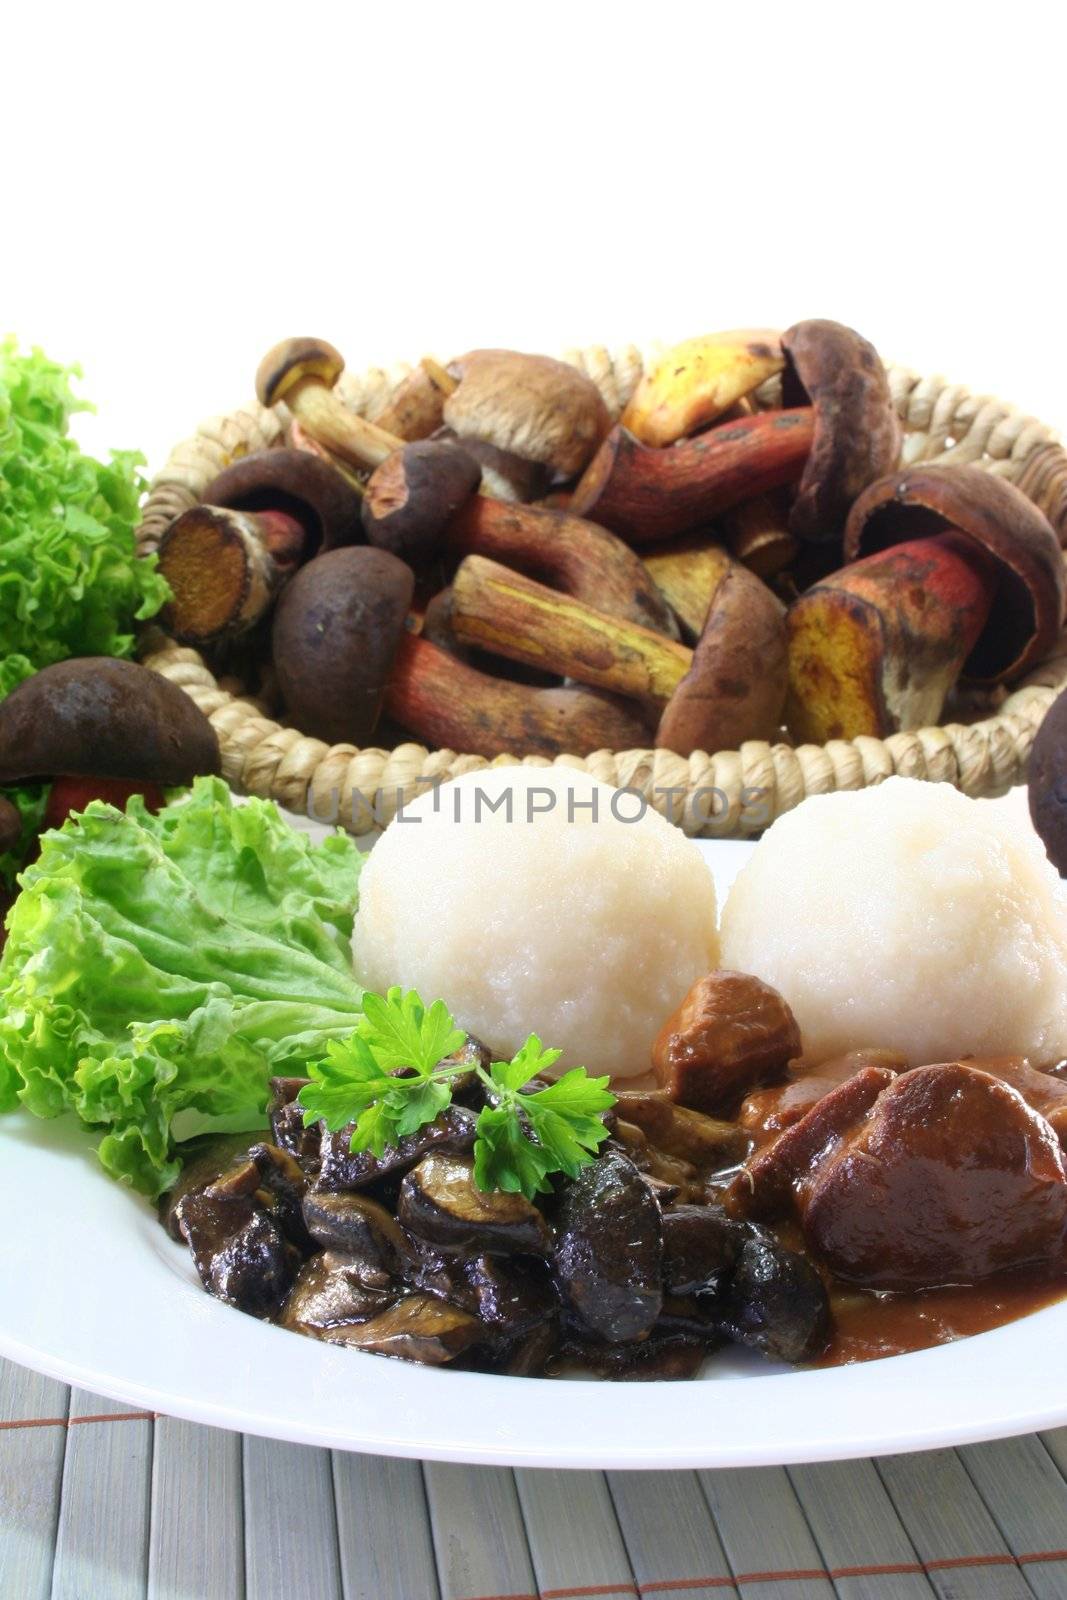 Venison goulash with dumplings and fresh wild mushrooms